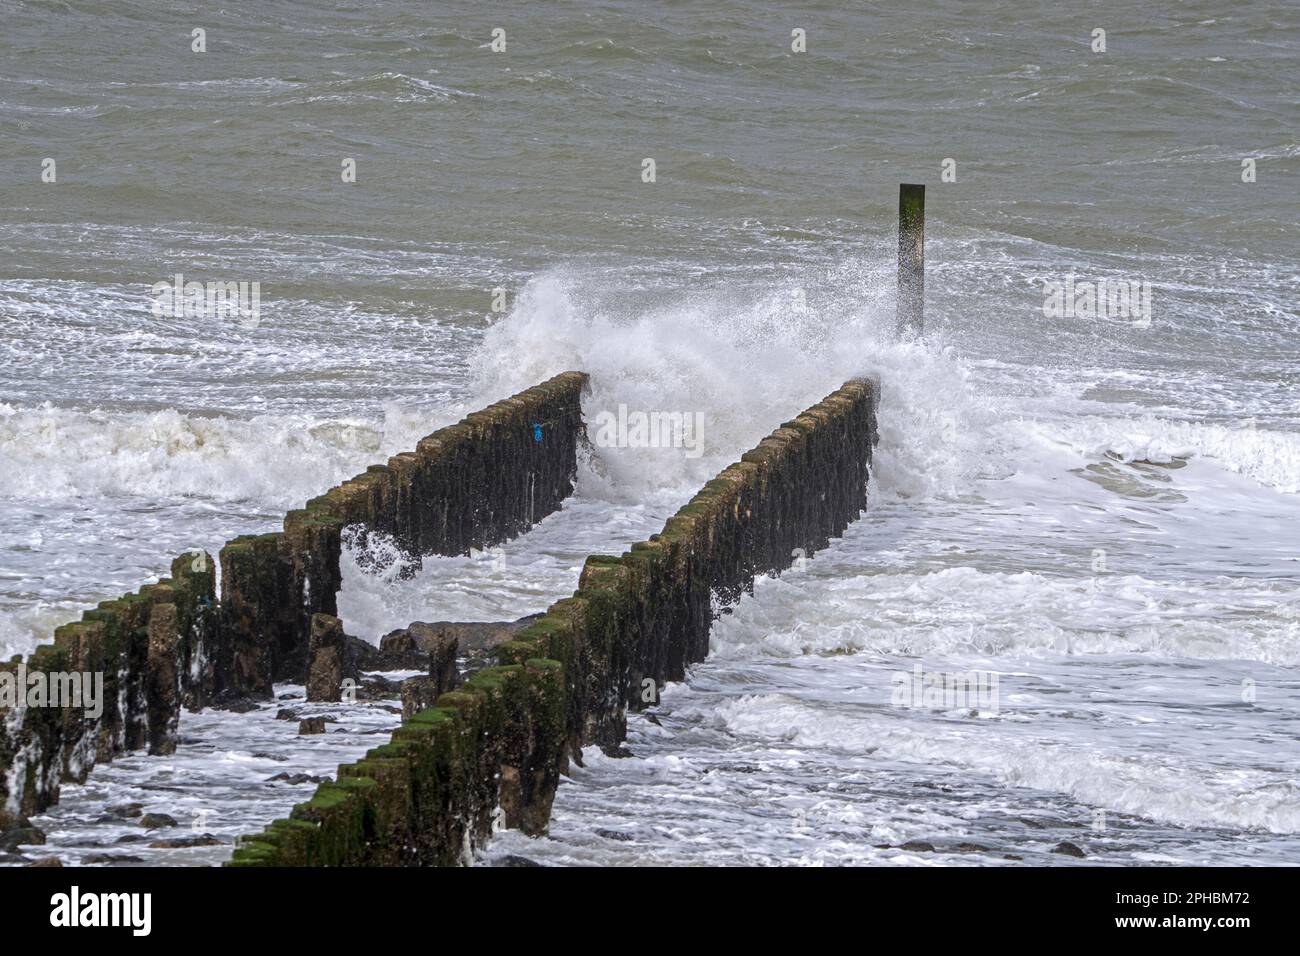 Wave crashing into wooden groyne / breakwater to avoid beach erosion during winter storm along North Sea coast in Zeeland, Netherlands Stock Photo